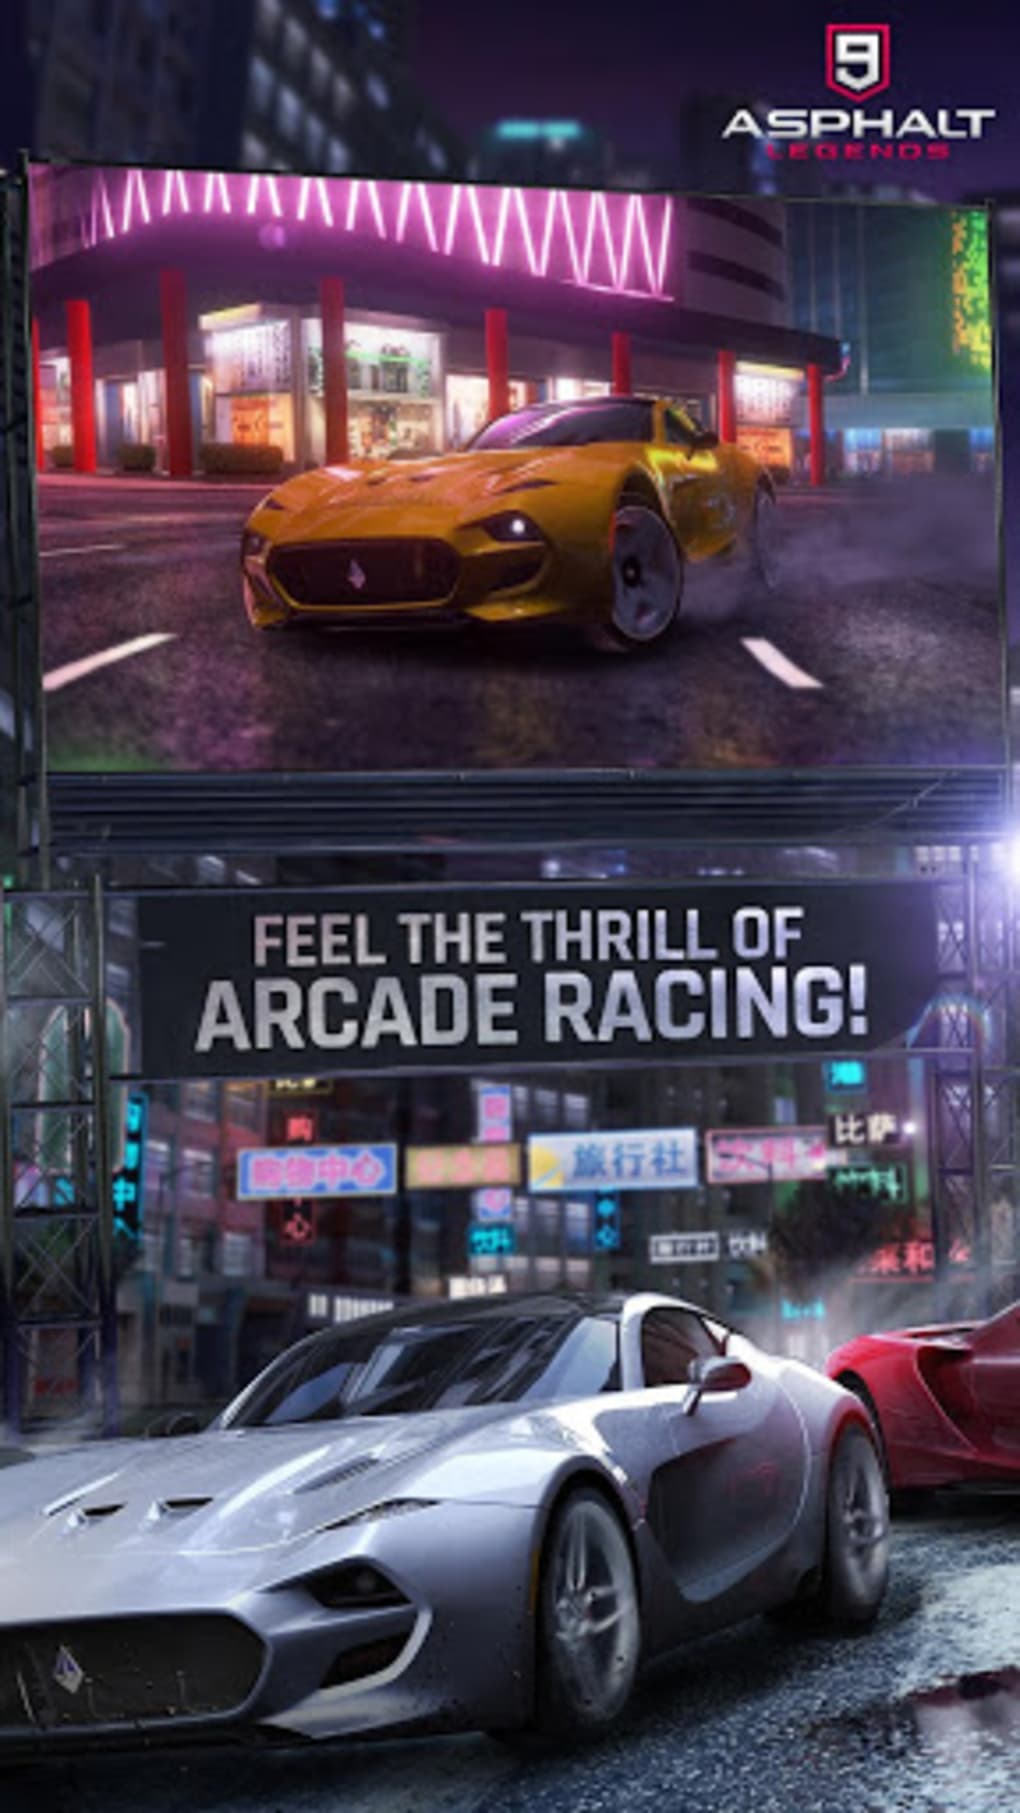 asphalt 9 legends 2018s new arcade racing game apkpure